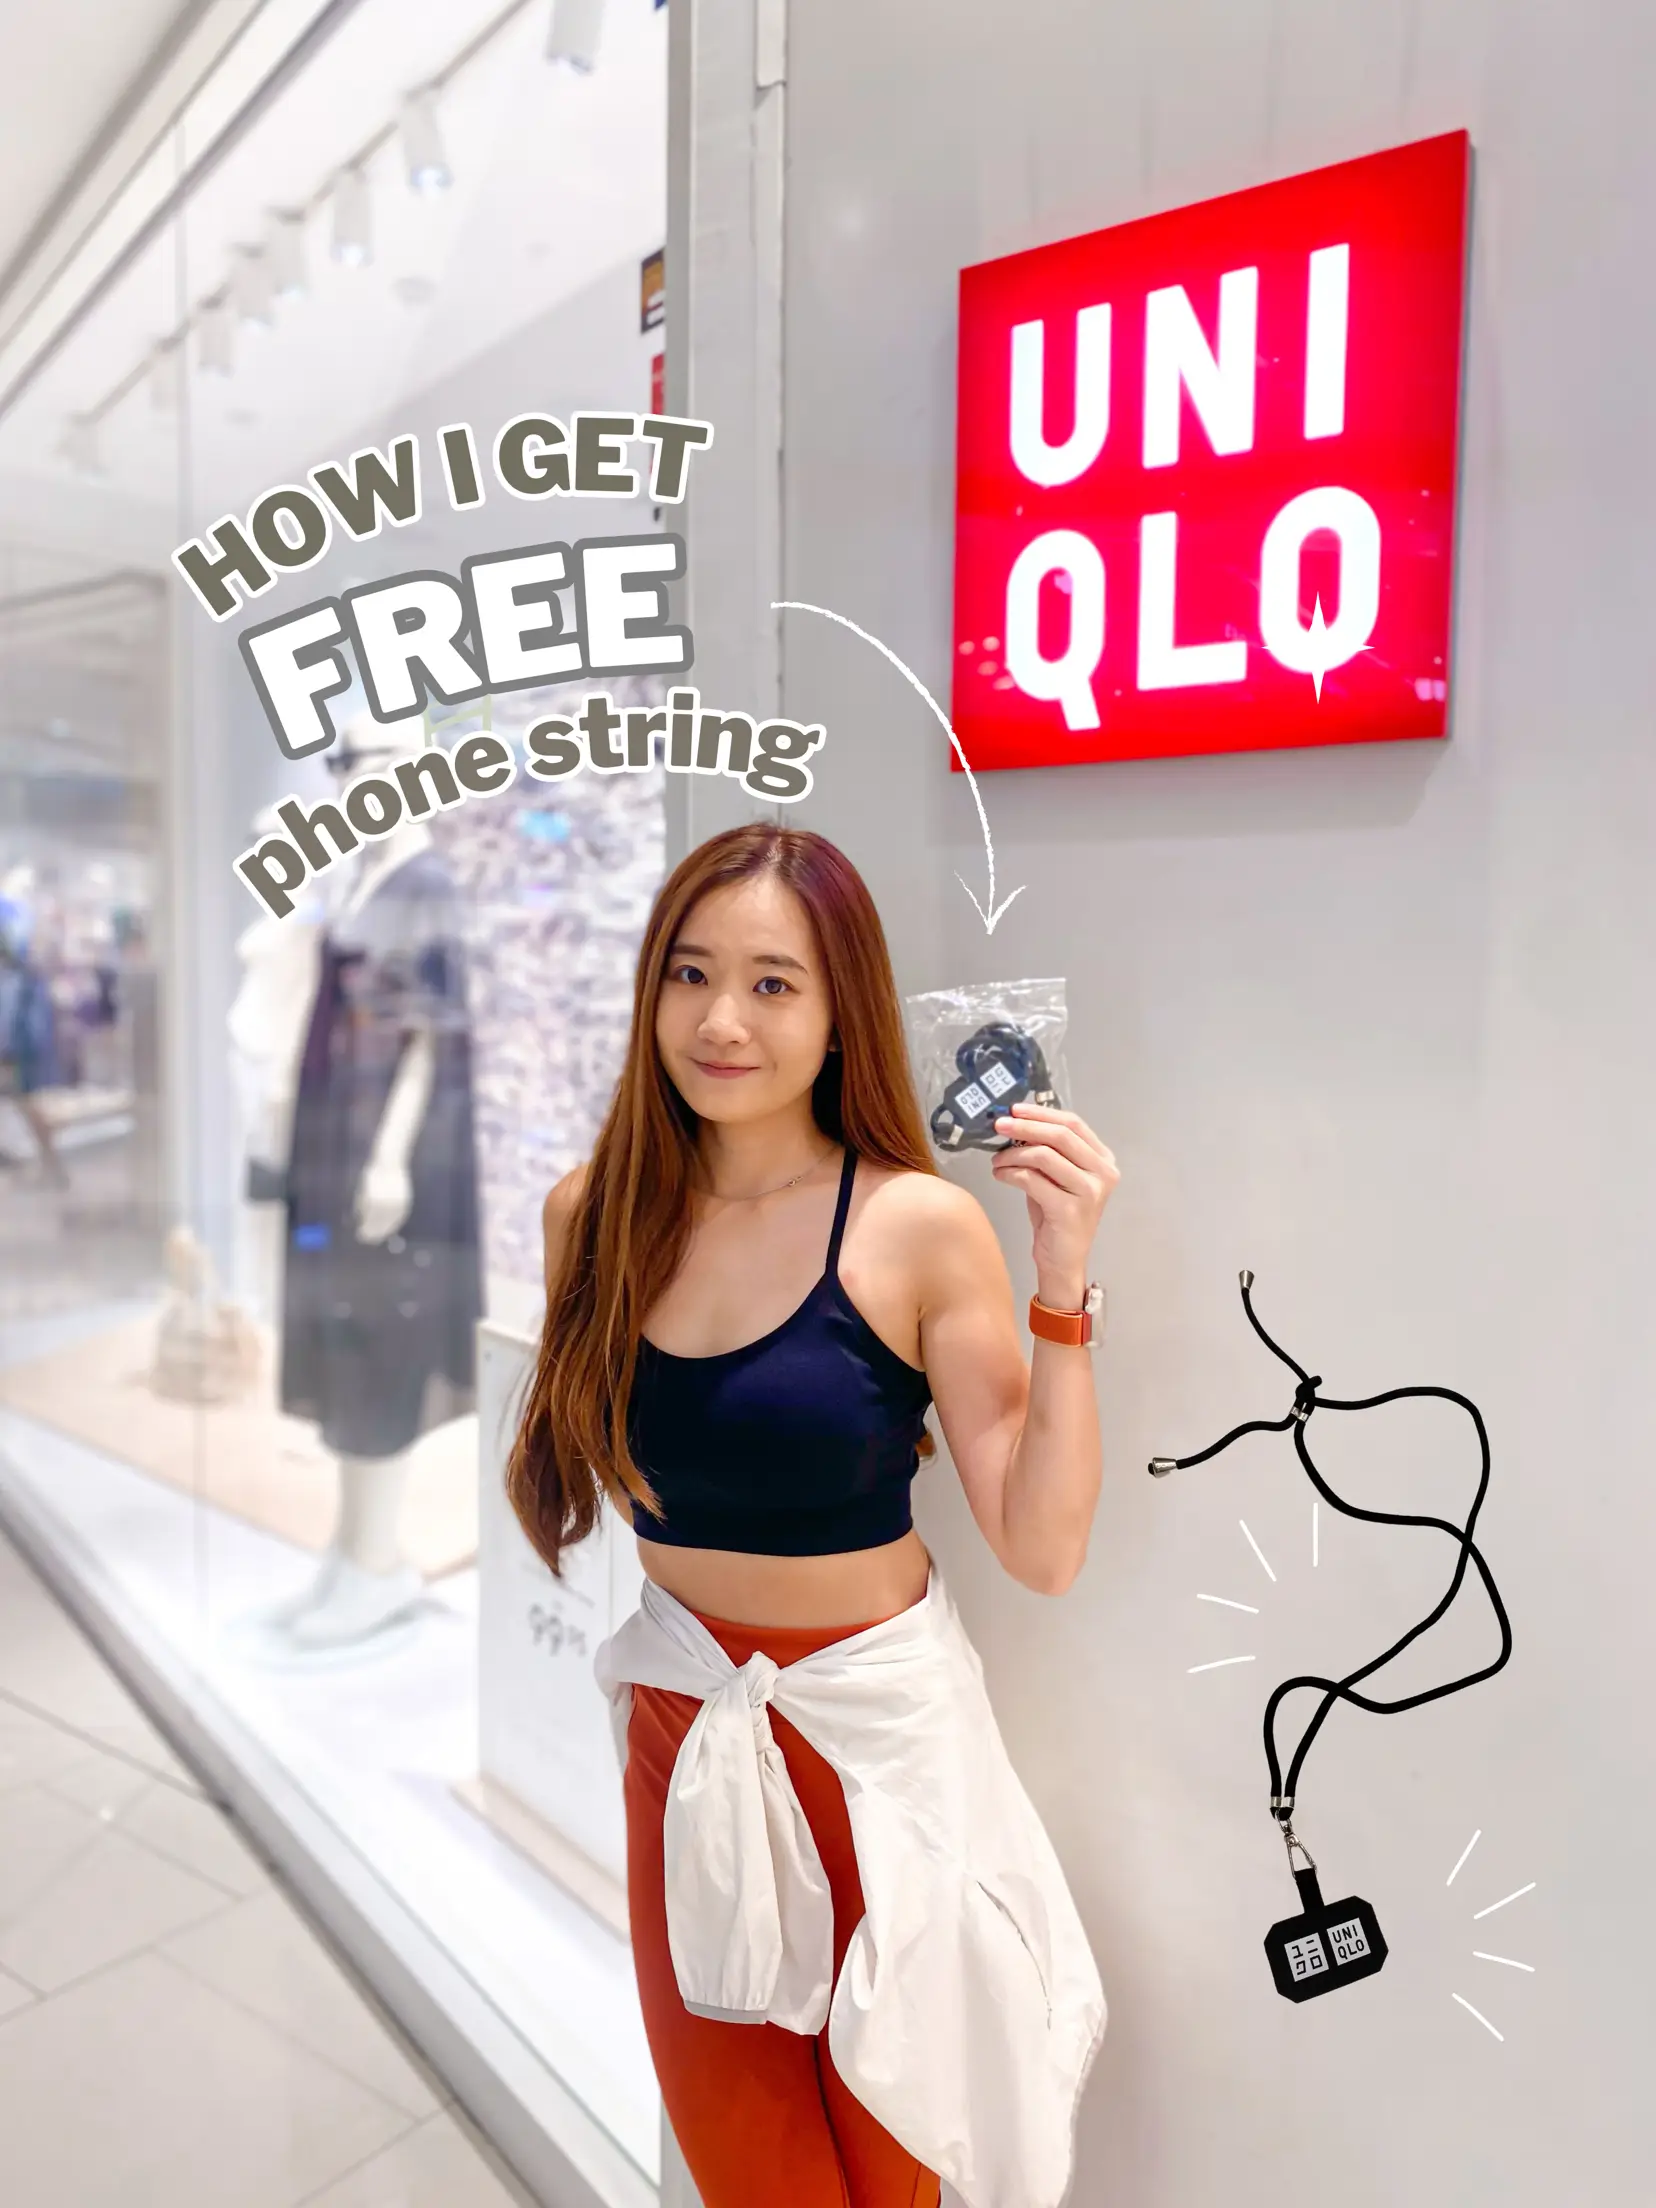 🎁 In celebration of UNIQLO Plaza Singapura reopening, get a FREE